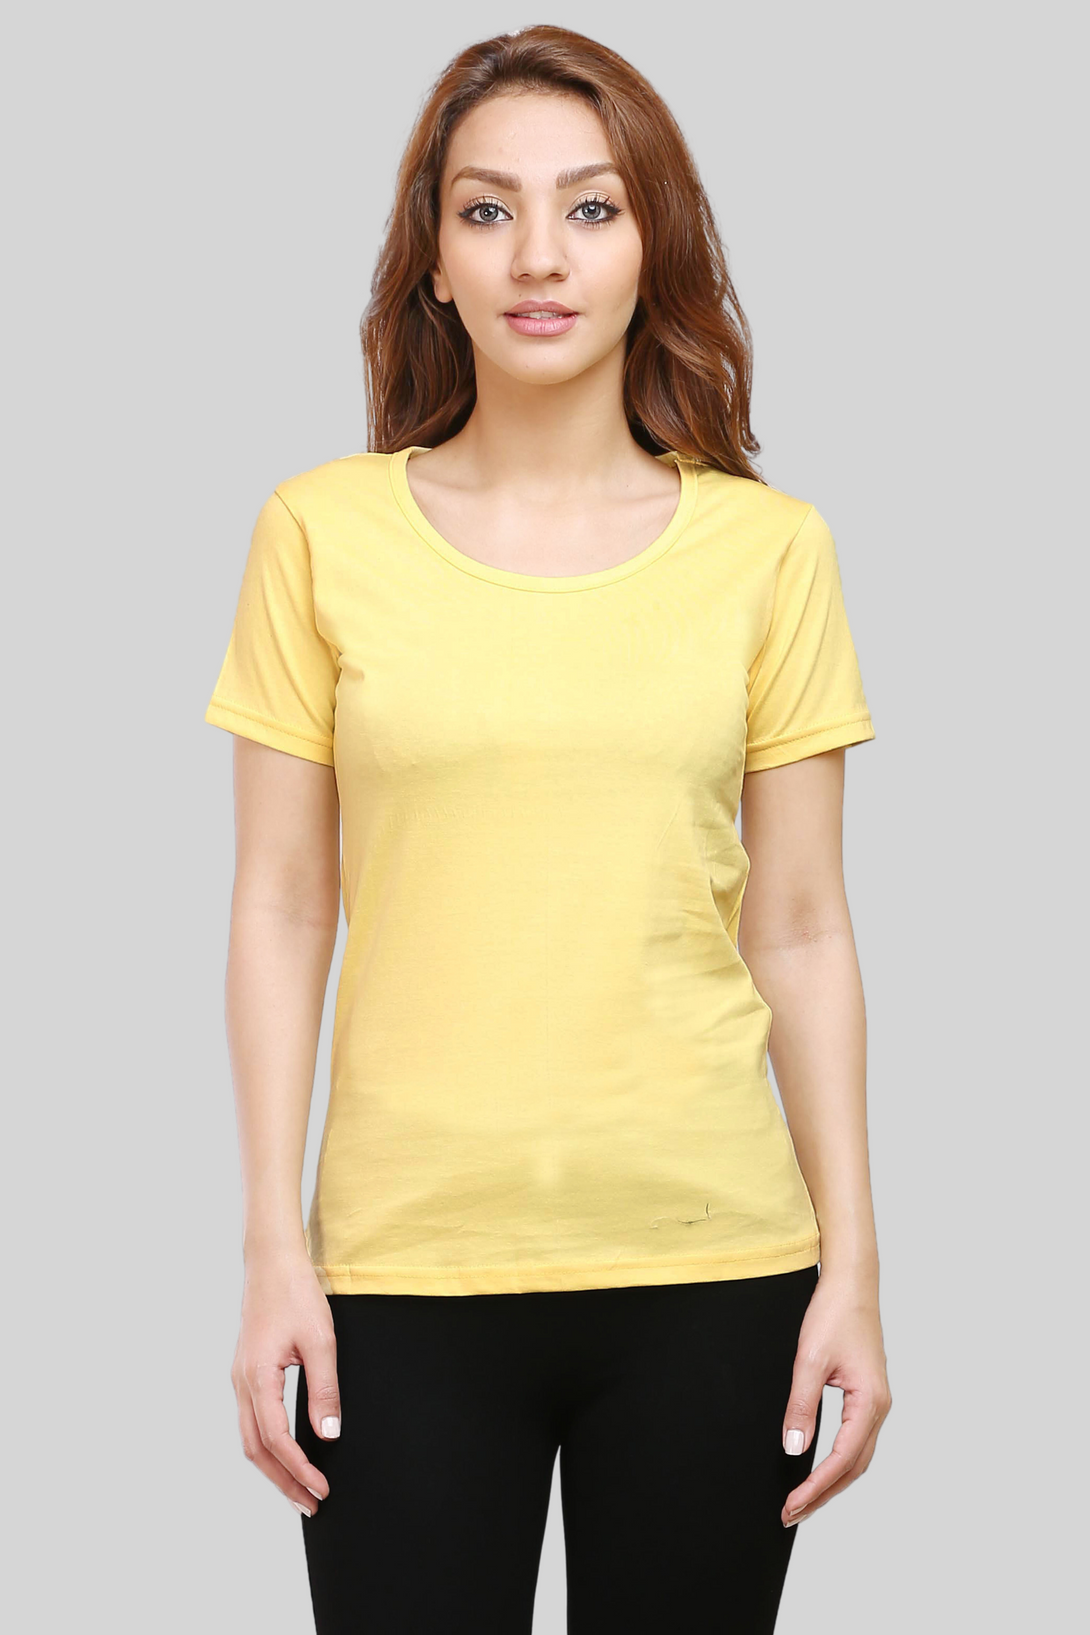 Yellow Scoop Neck T-Shirt For Women - WowWaves - 3